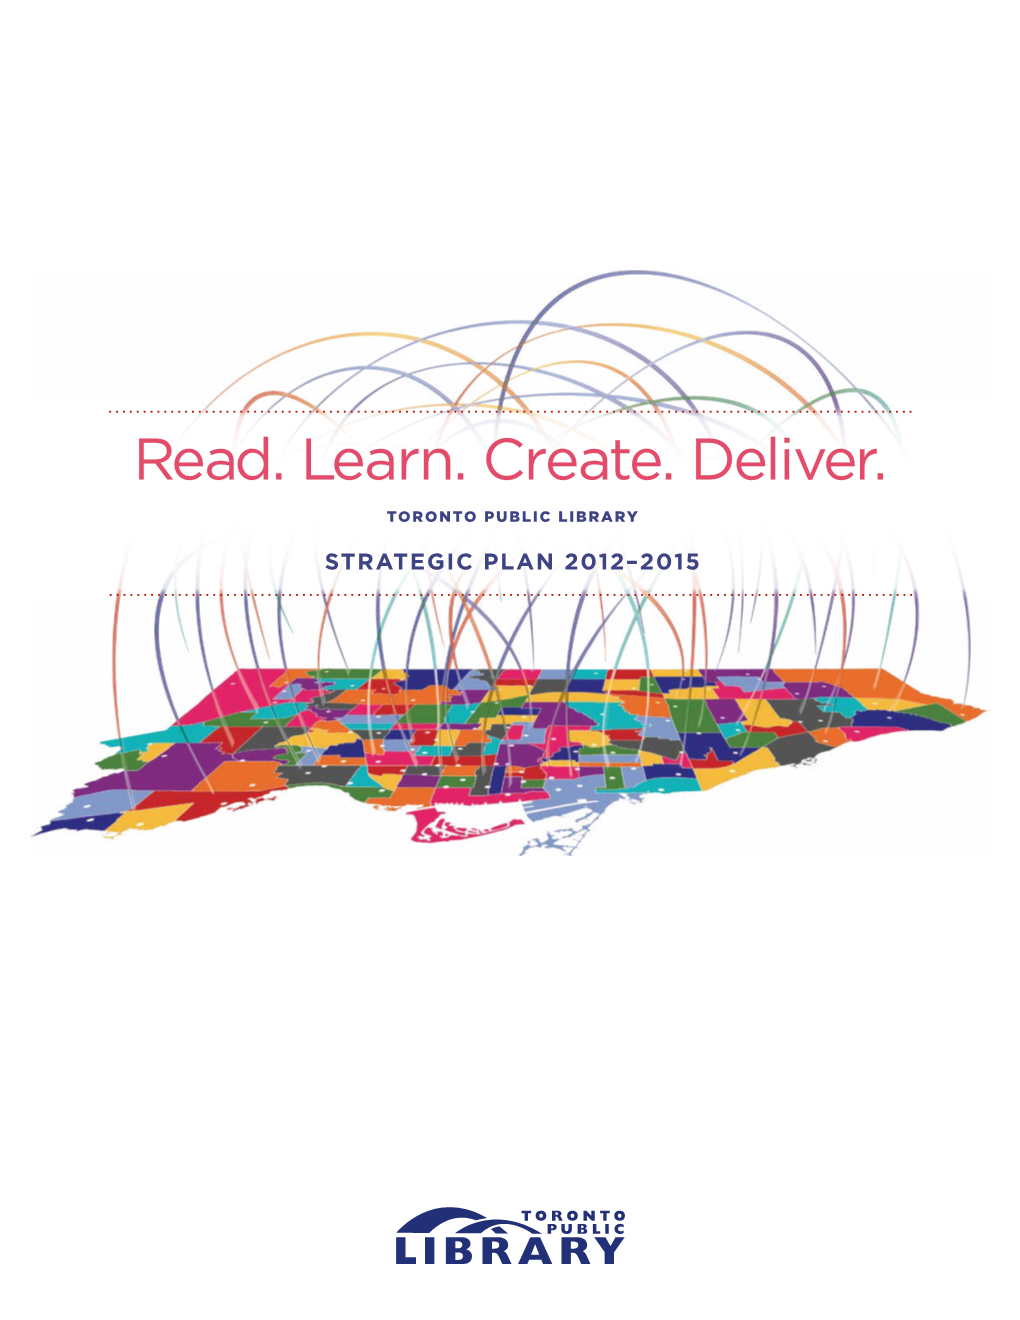 2012-2015: Read. Learn. Create. Deliver